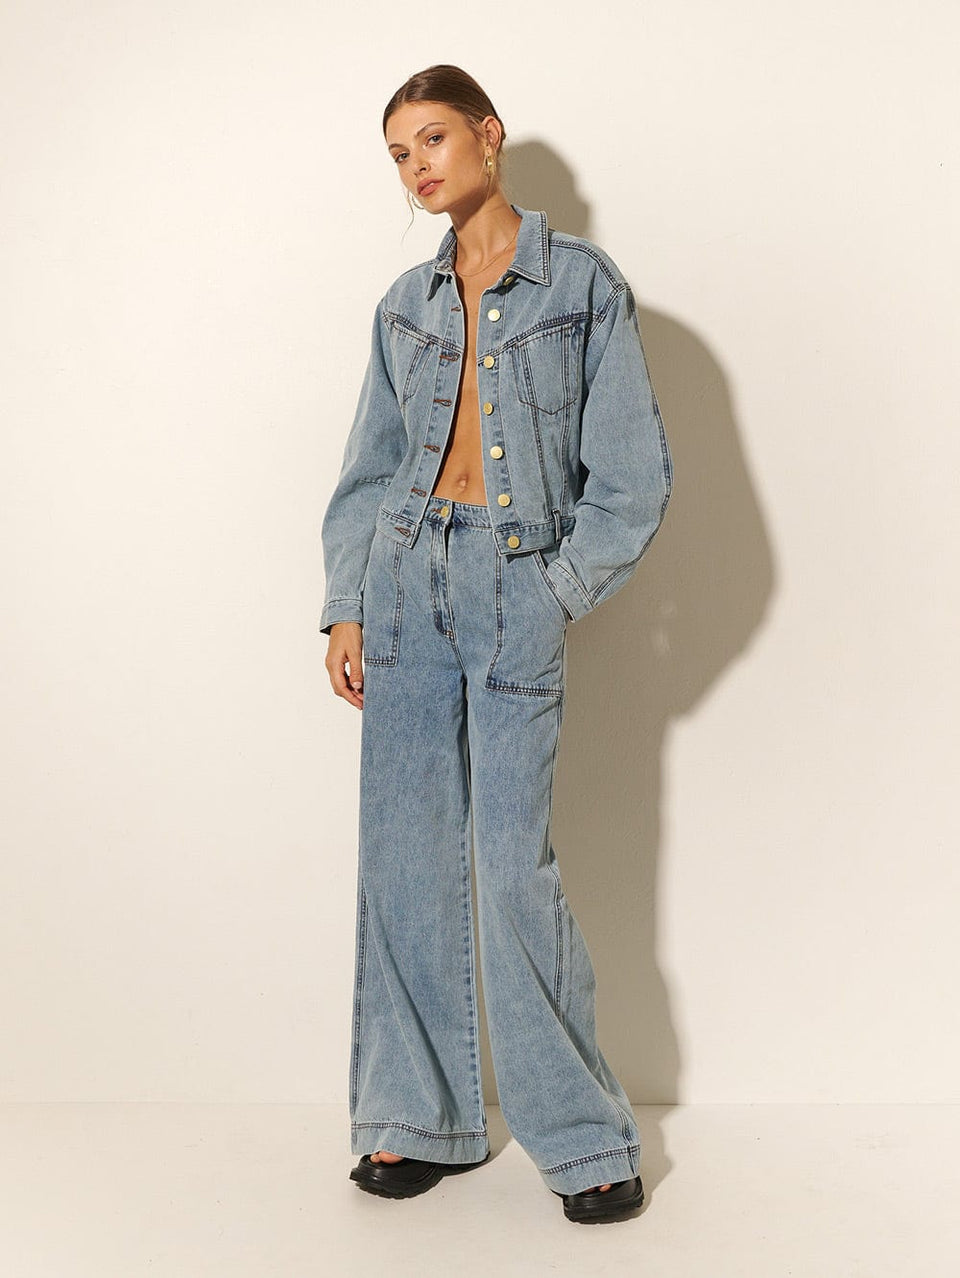 KIVARI Azalia High Waisted Jean | Model wearing Blue Denim High Waisted Jeans